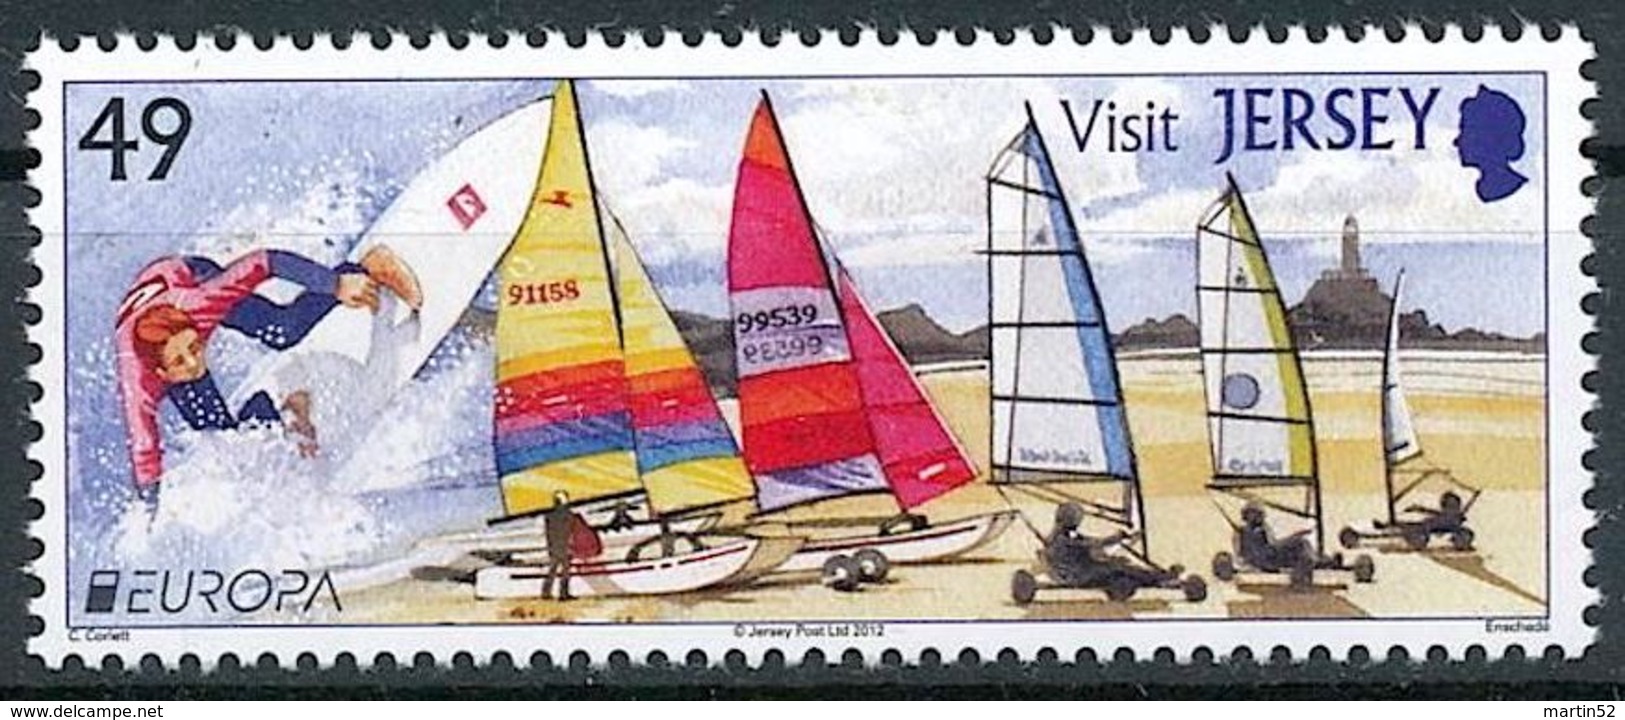 Jersey 2012: "Surfing, Sailing & Windsurfing" Michel-No. 1615 ** MNH - START BELOW POSTAL FACE VALUE (£ 0.49) - Ski Náutico